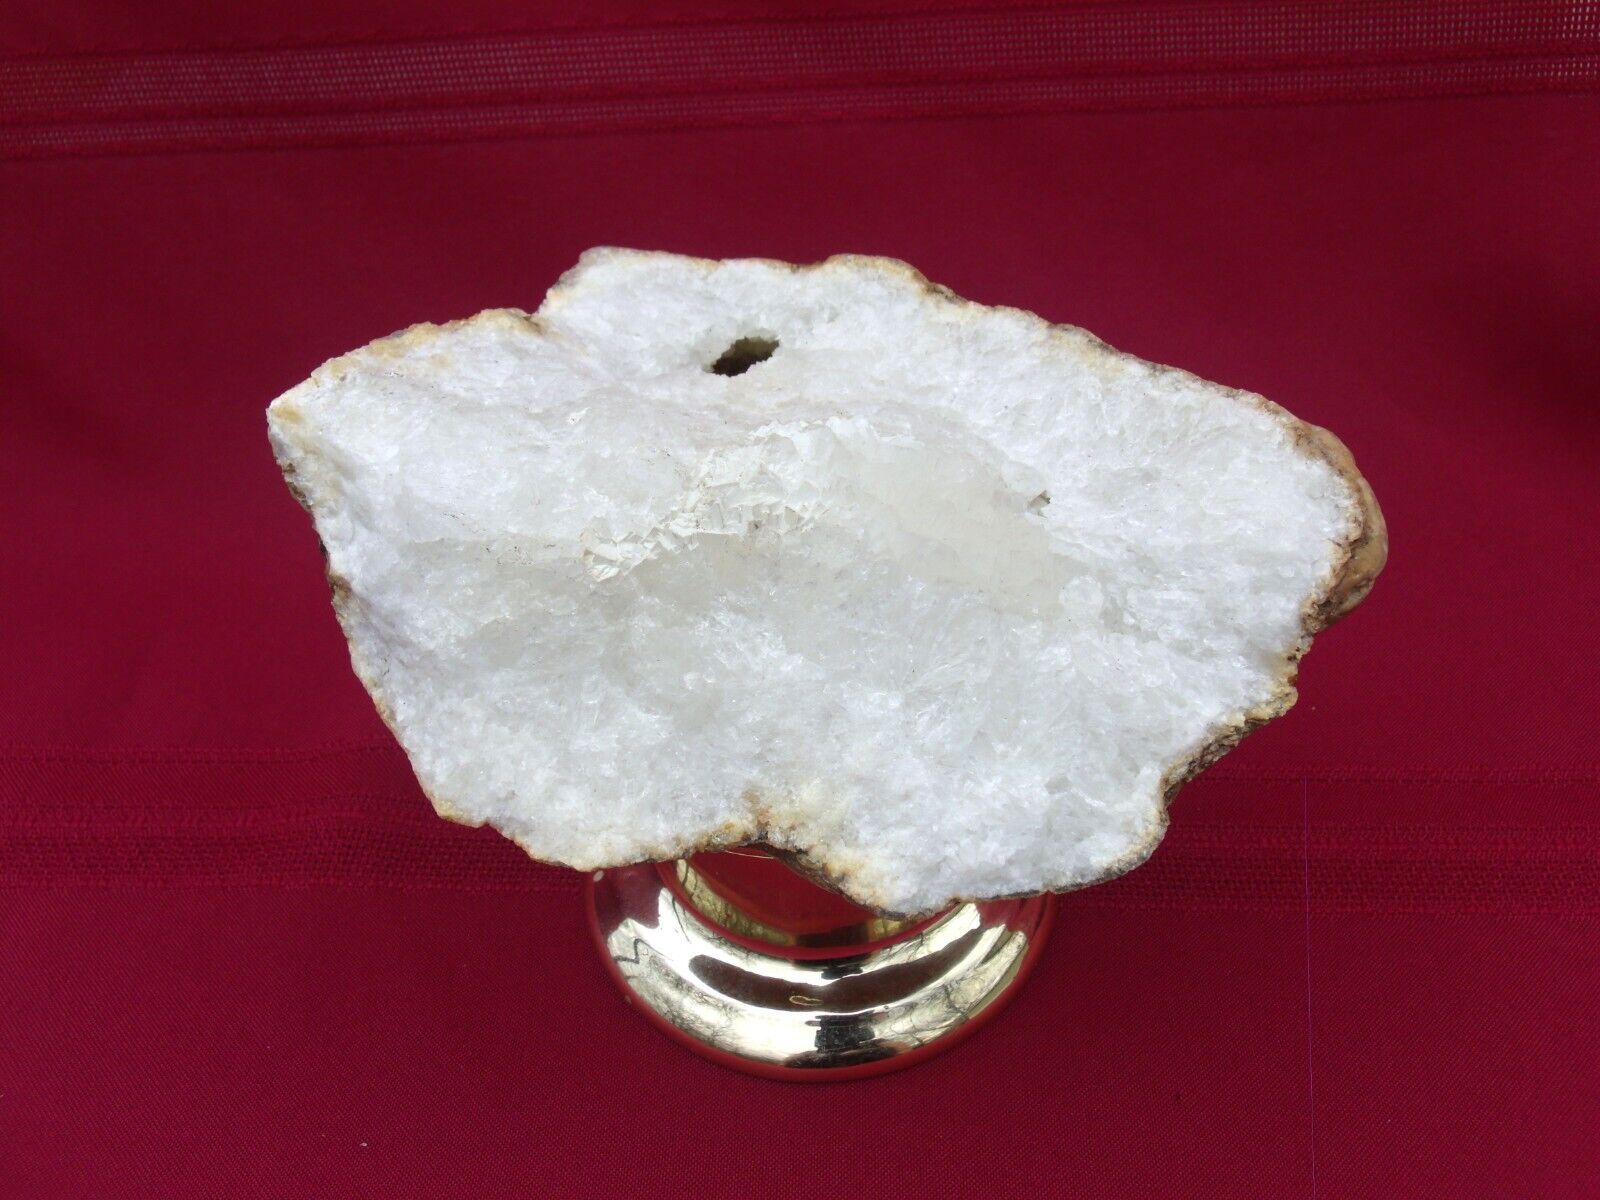 Stunning Kentucky Geode 2.6LB Crystal Quartz Unique Display Piece Gift Idea